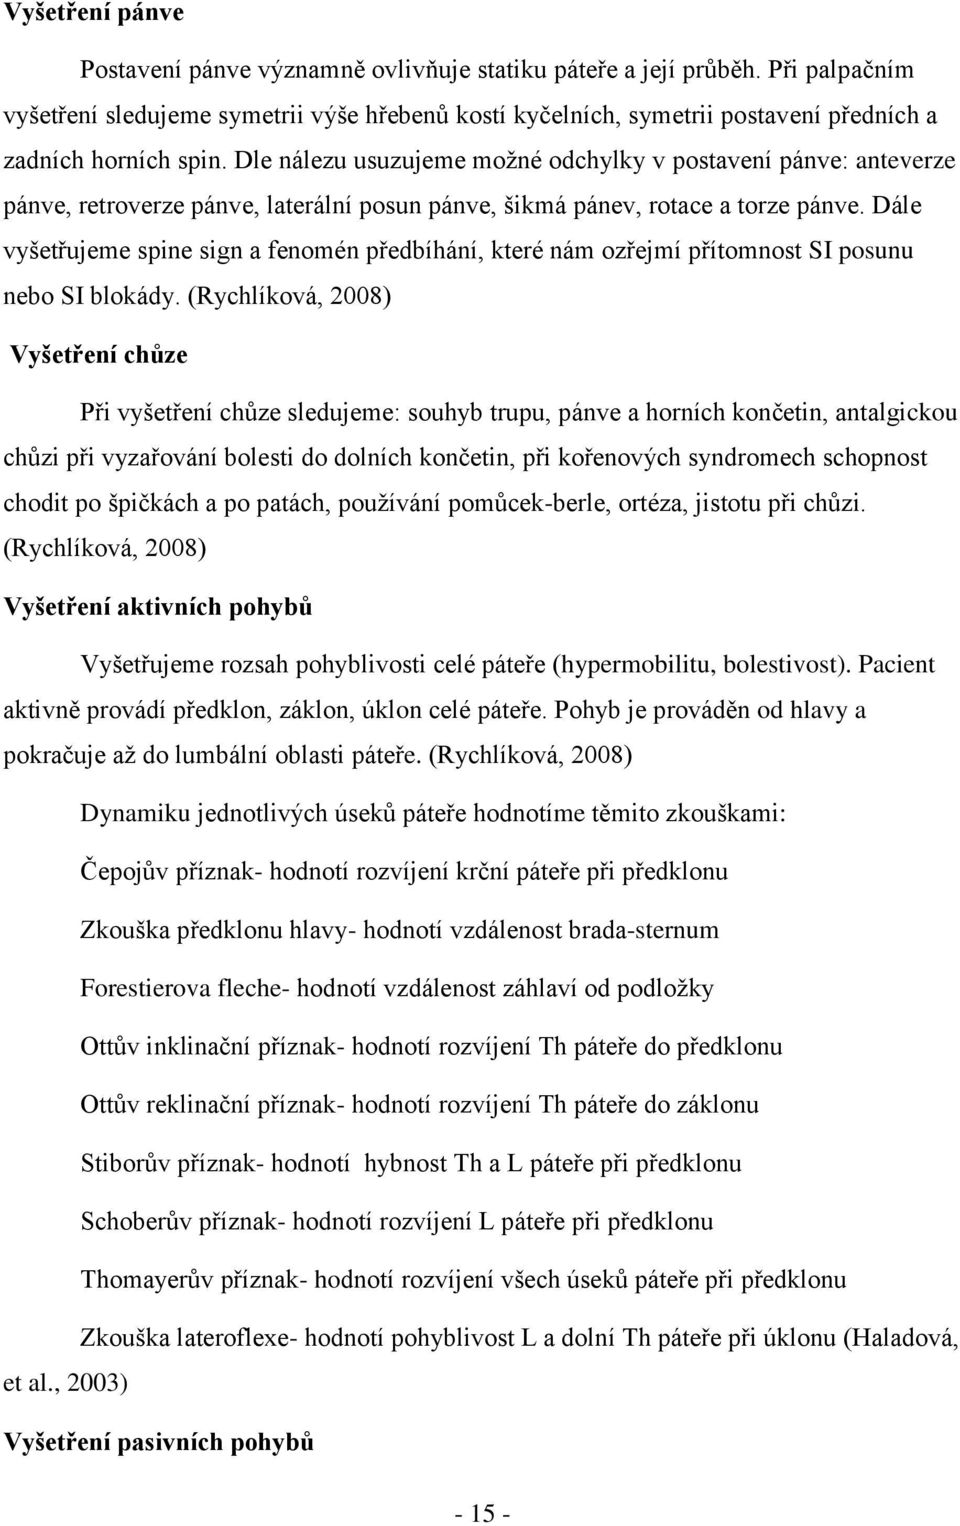 Slovenská zdravotnícka univerzita v Bratislave - PDF Free Download